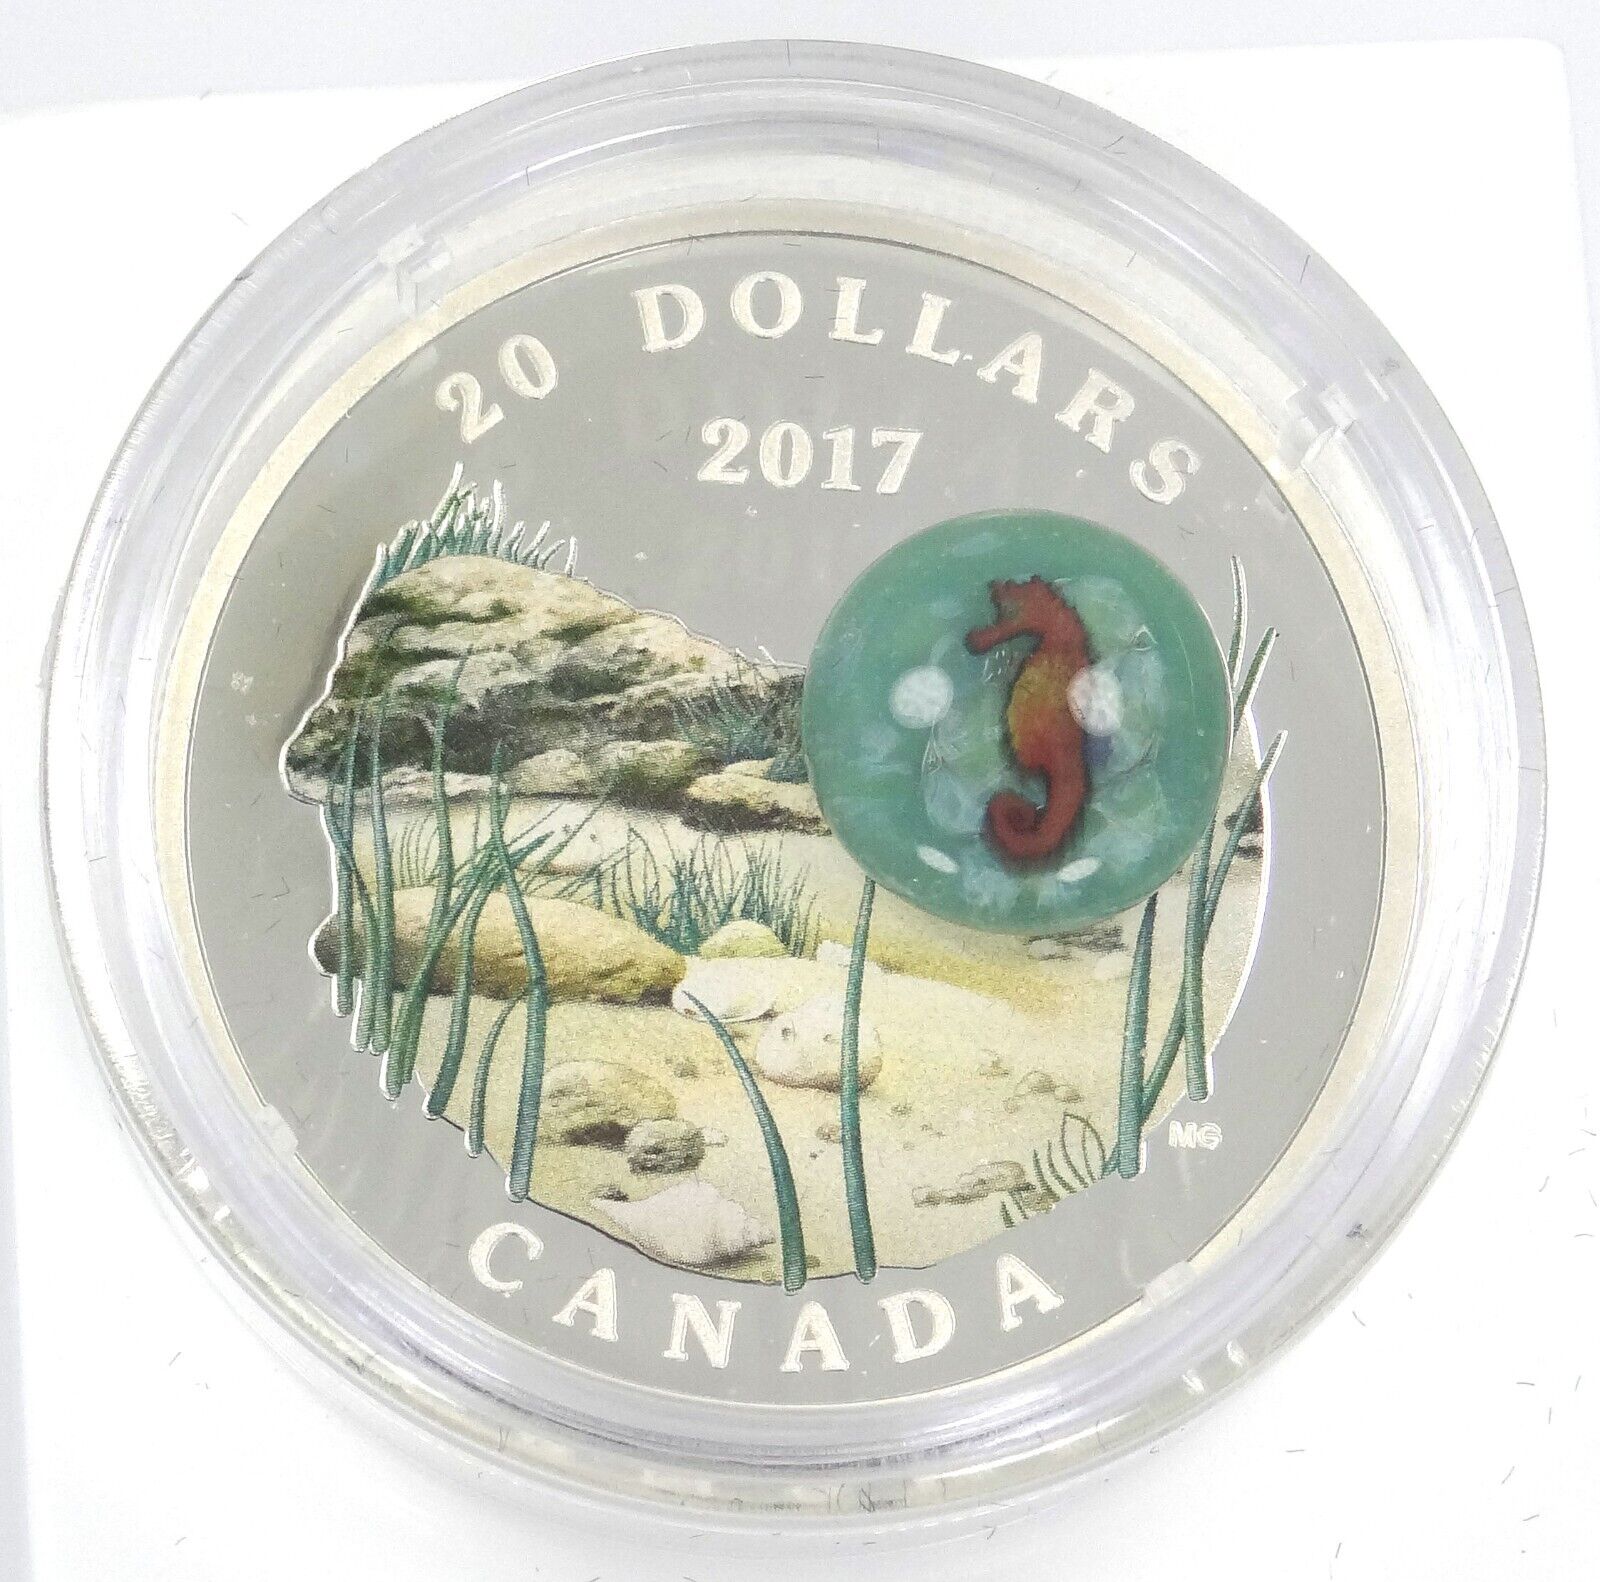 31.39g Silver Coin 2017 Canada $20 Murrini Glass Proof Under the Sea - Seahorse-classypw.com-1